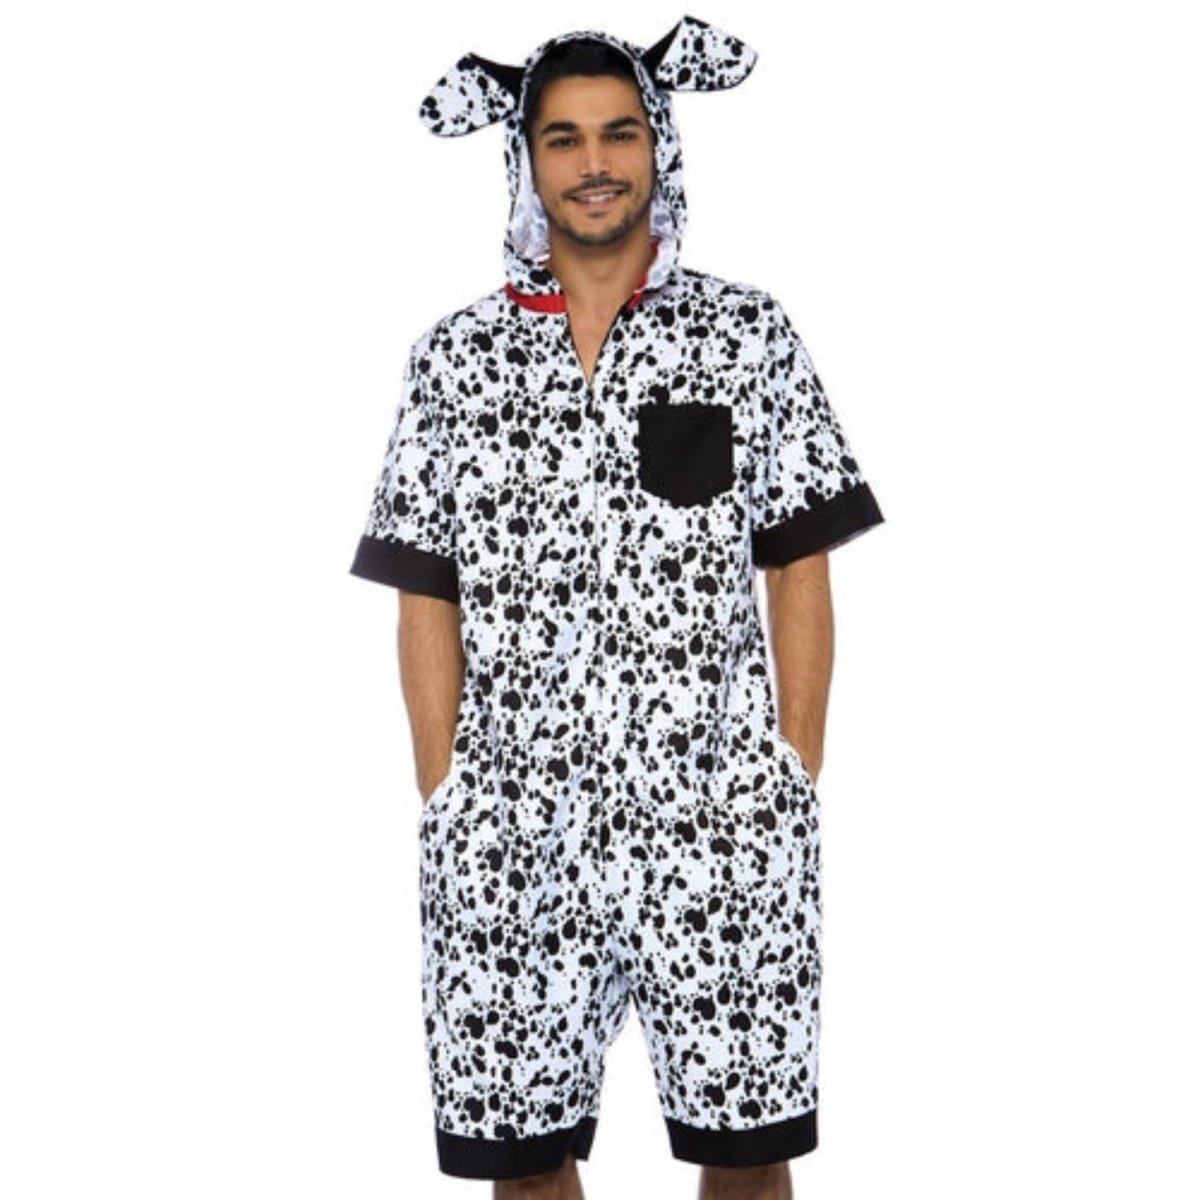 Dalmatian Dog Costume - worldclasscostumes